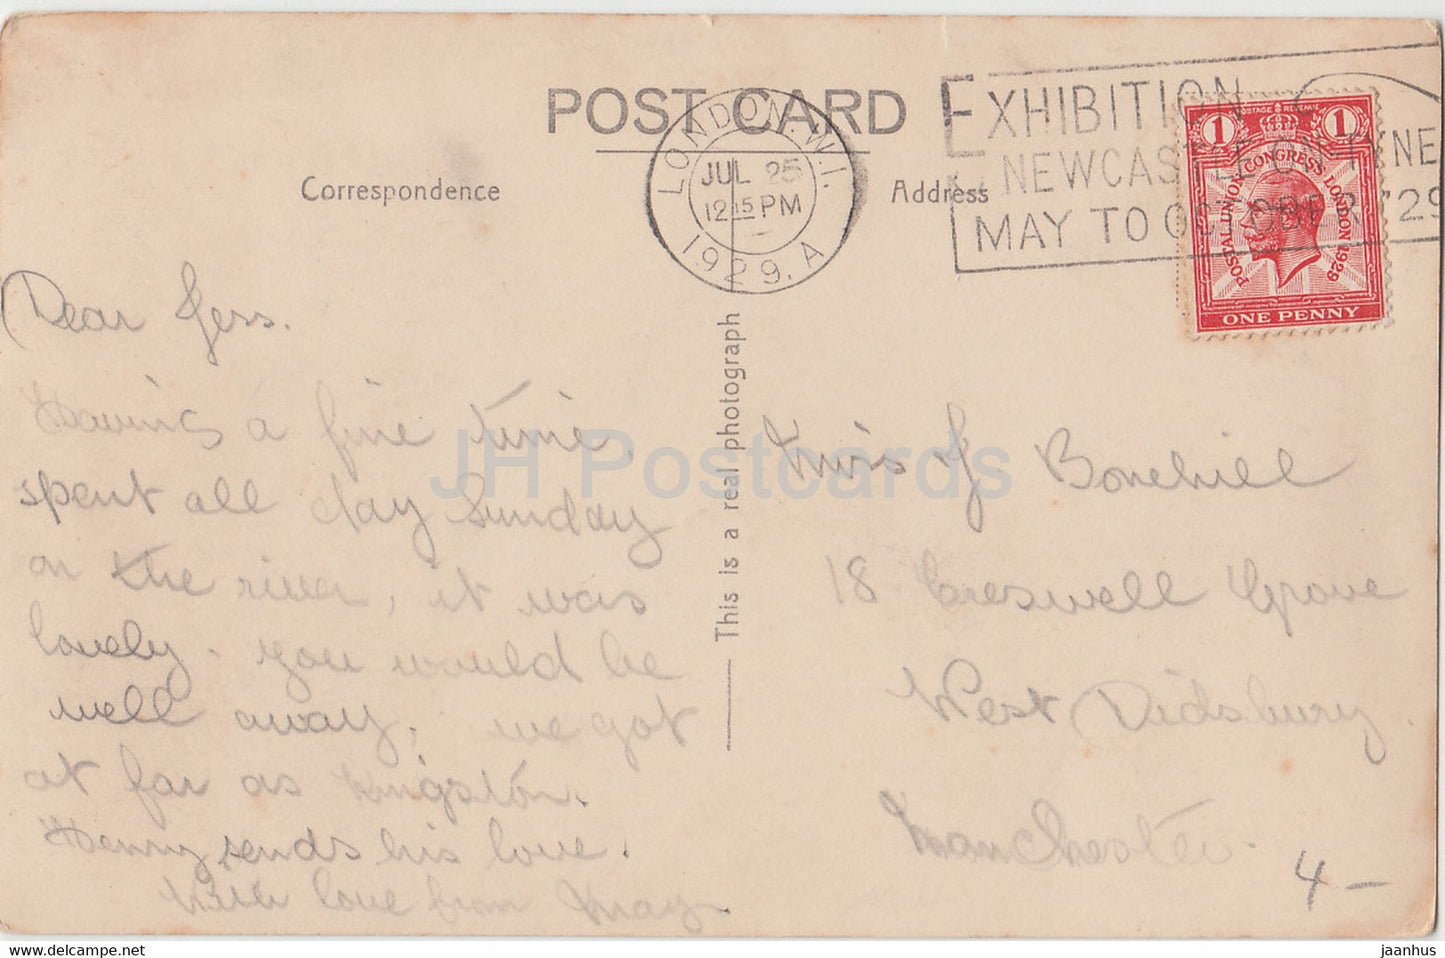 London - The Embankment & Hotels Cecil & Savoy - tram - 24297 - old postcard - 1929 - England - United Kingdom - used